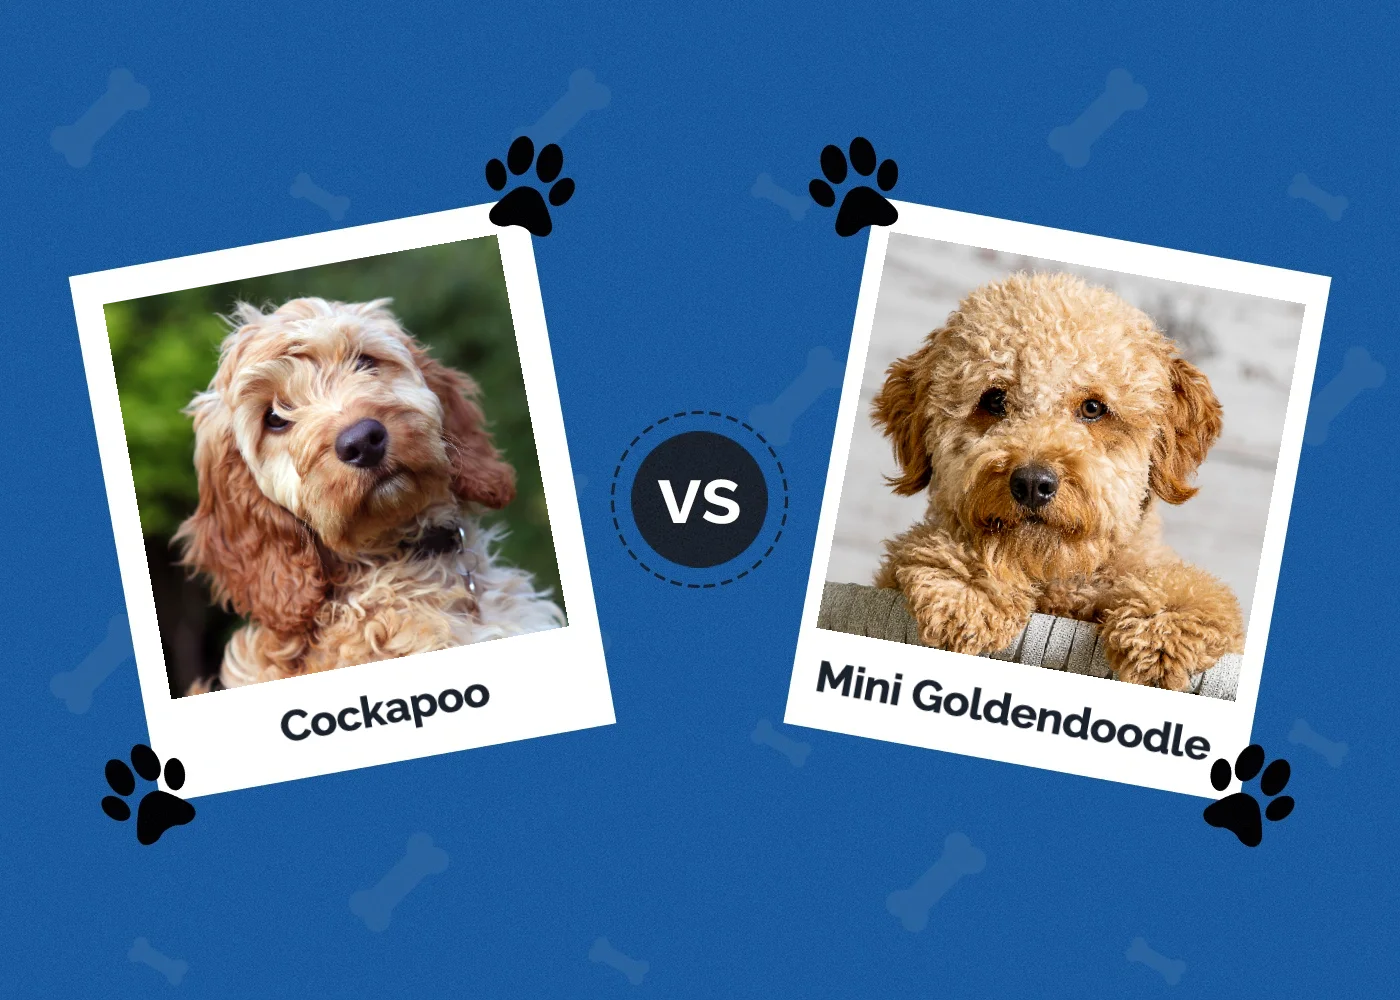 Cockapoo vs Mini Goldendoodle - Featured Image